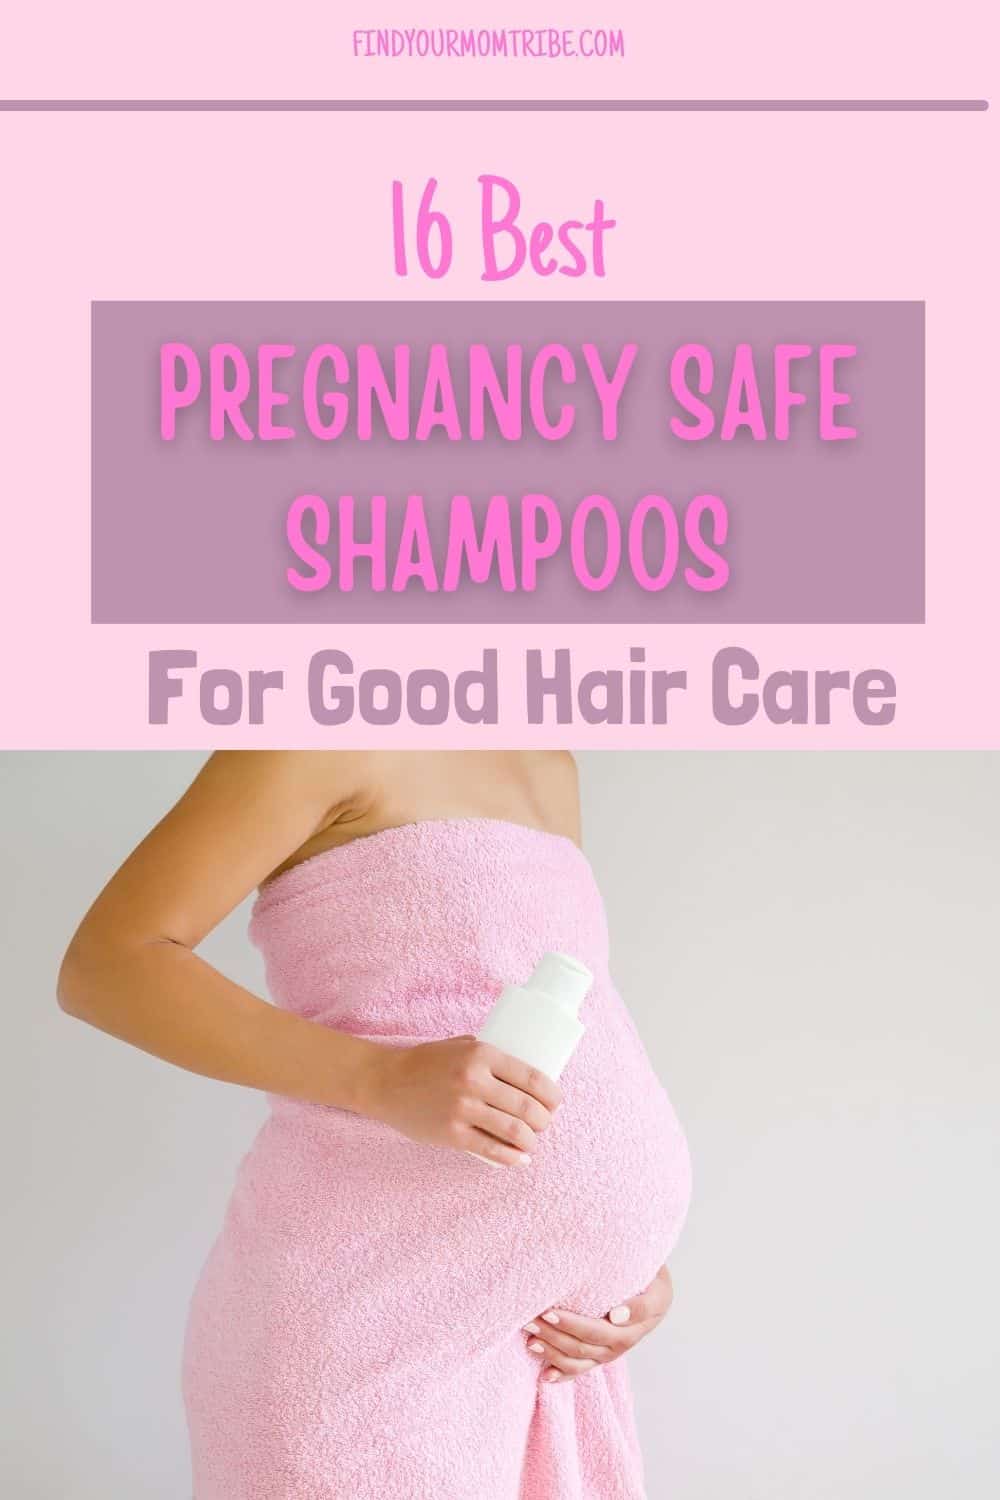 Pinterest pregnancy safe shampoo 